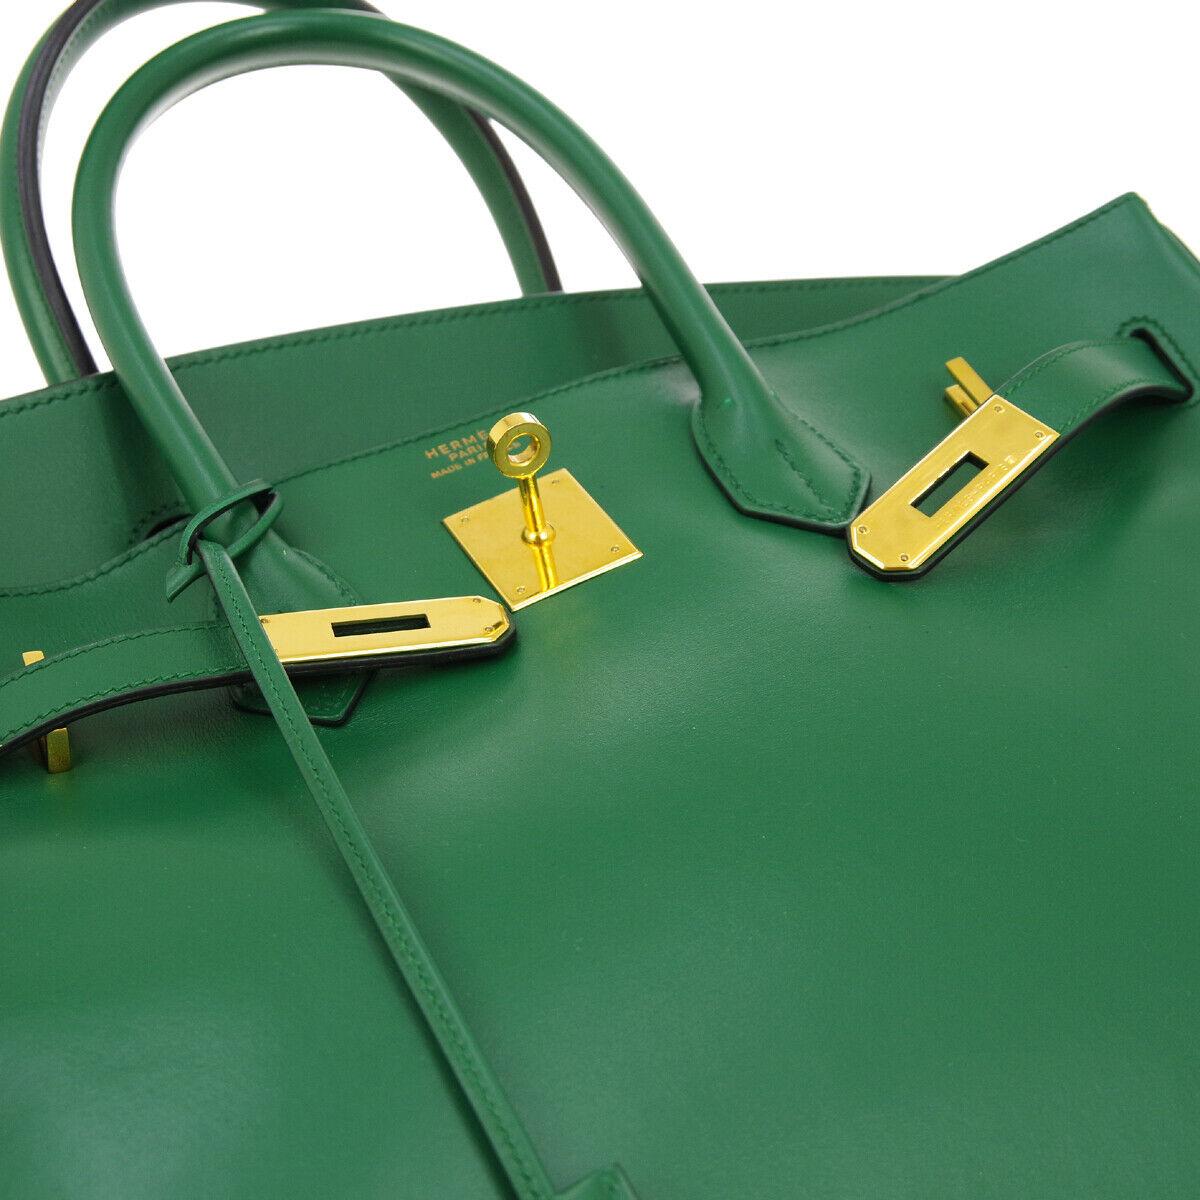 Blue Hermes Birkin 35 Green Leather Gold Top Carryall Handle Satchel Travel Tote Bag